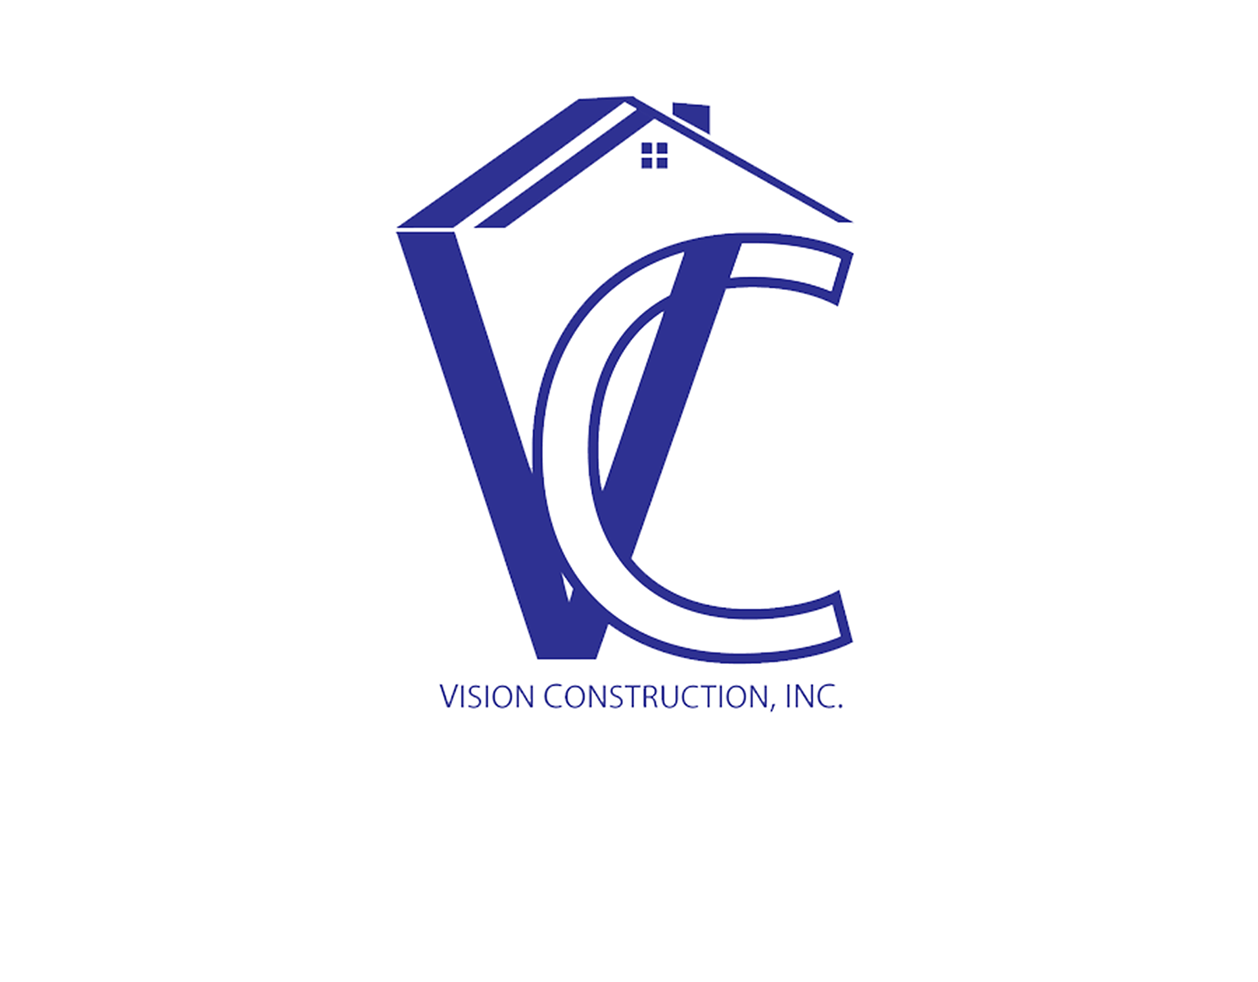 Vision Construction, Inc